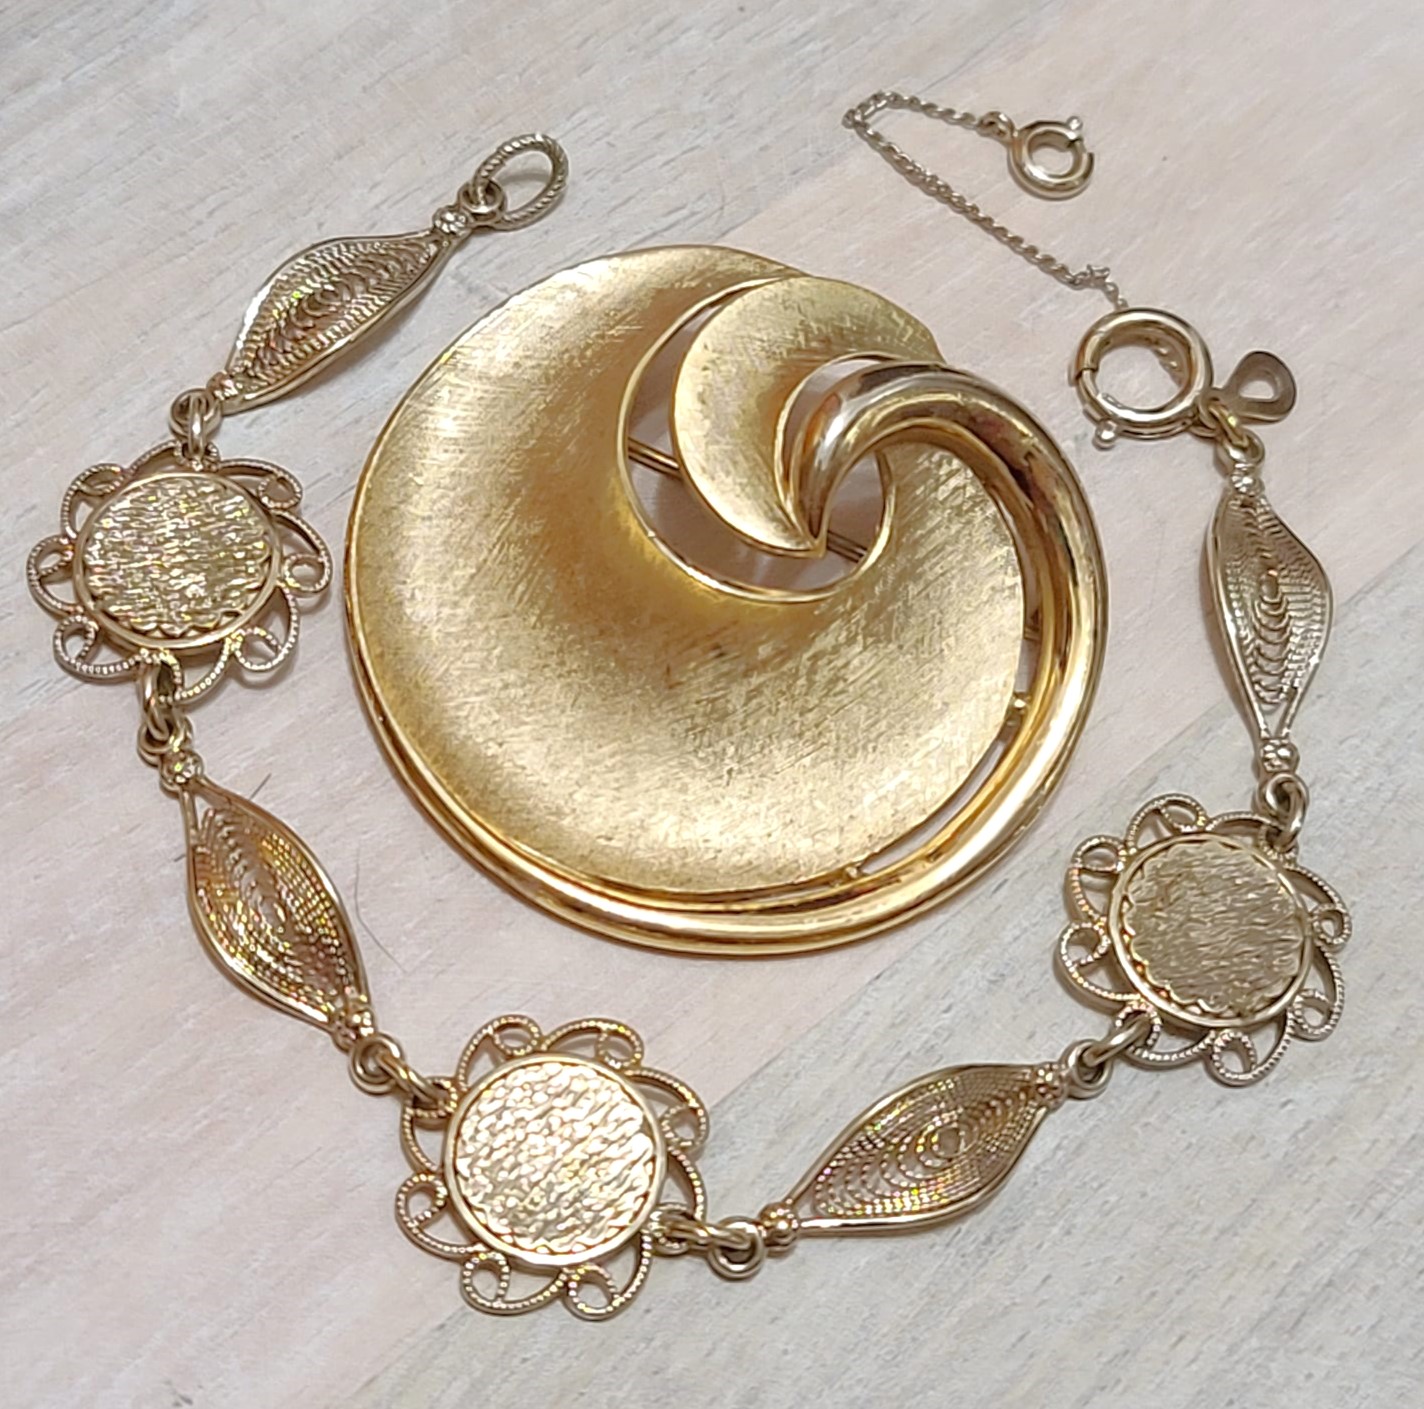 Vintage Trifari swirl pin and 14K gold plated filigree Amco bracelet